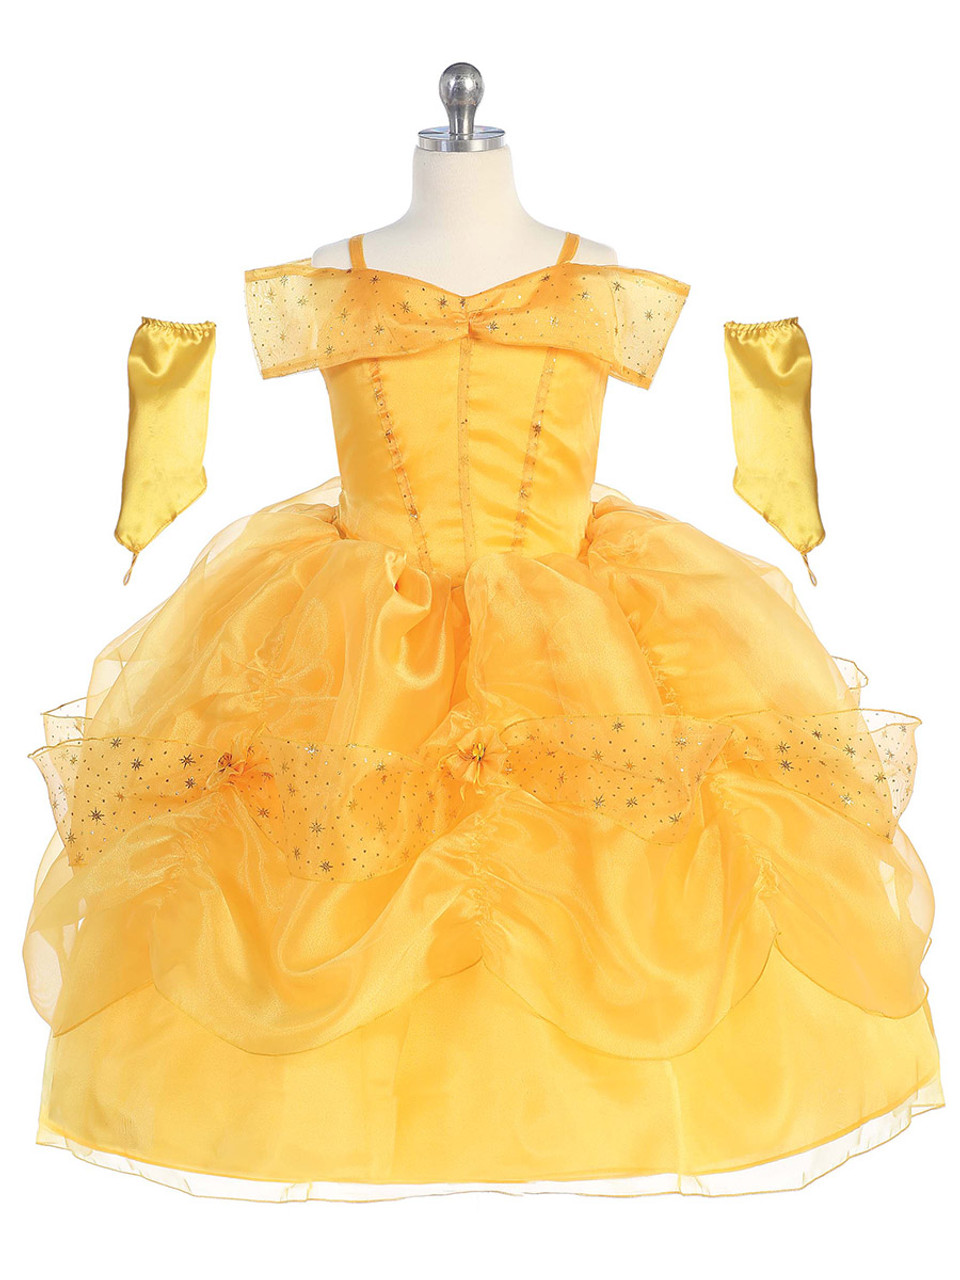 belle princess dress